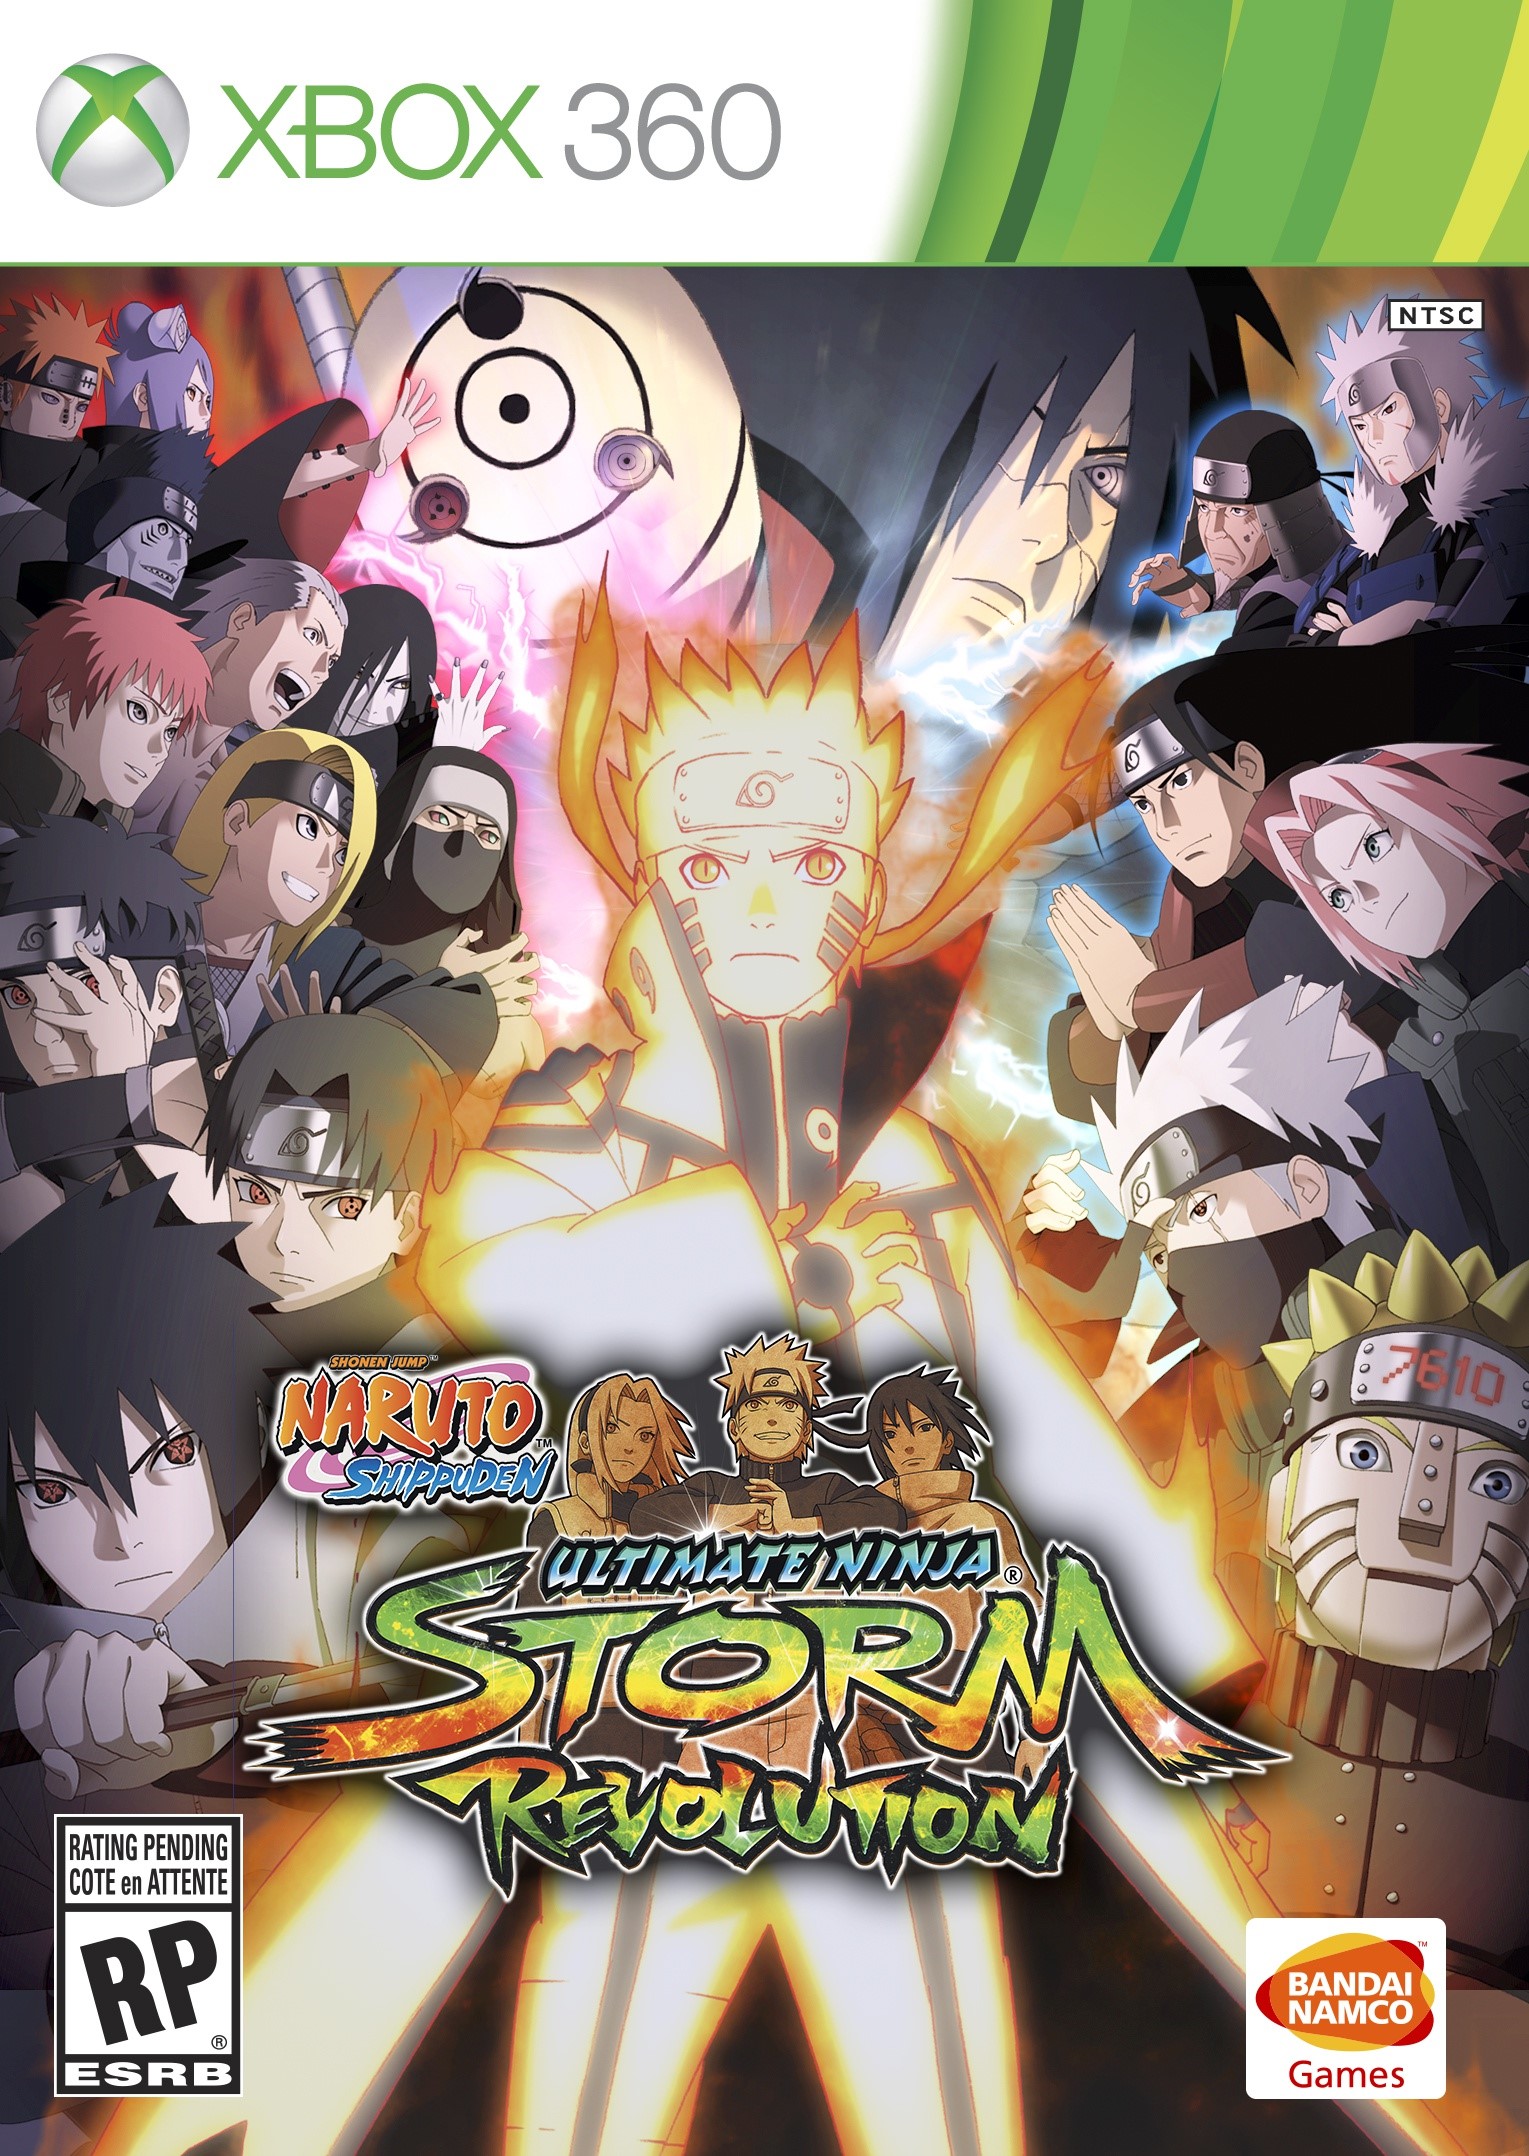 Обложка Я XBOX 360 |40| Naruto Storm R + Street Fighter IV + 6